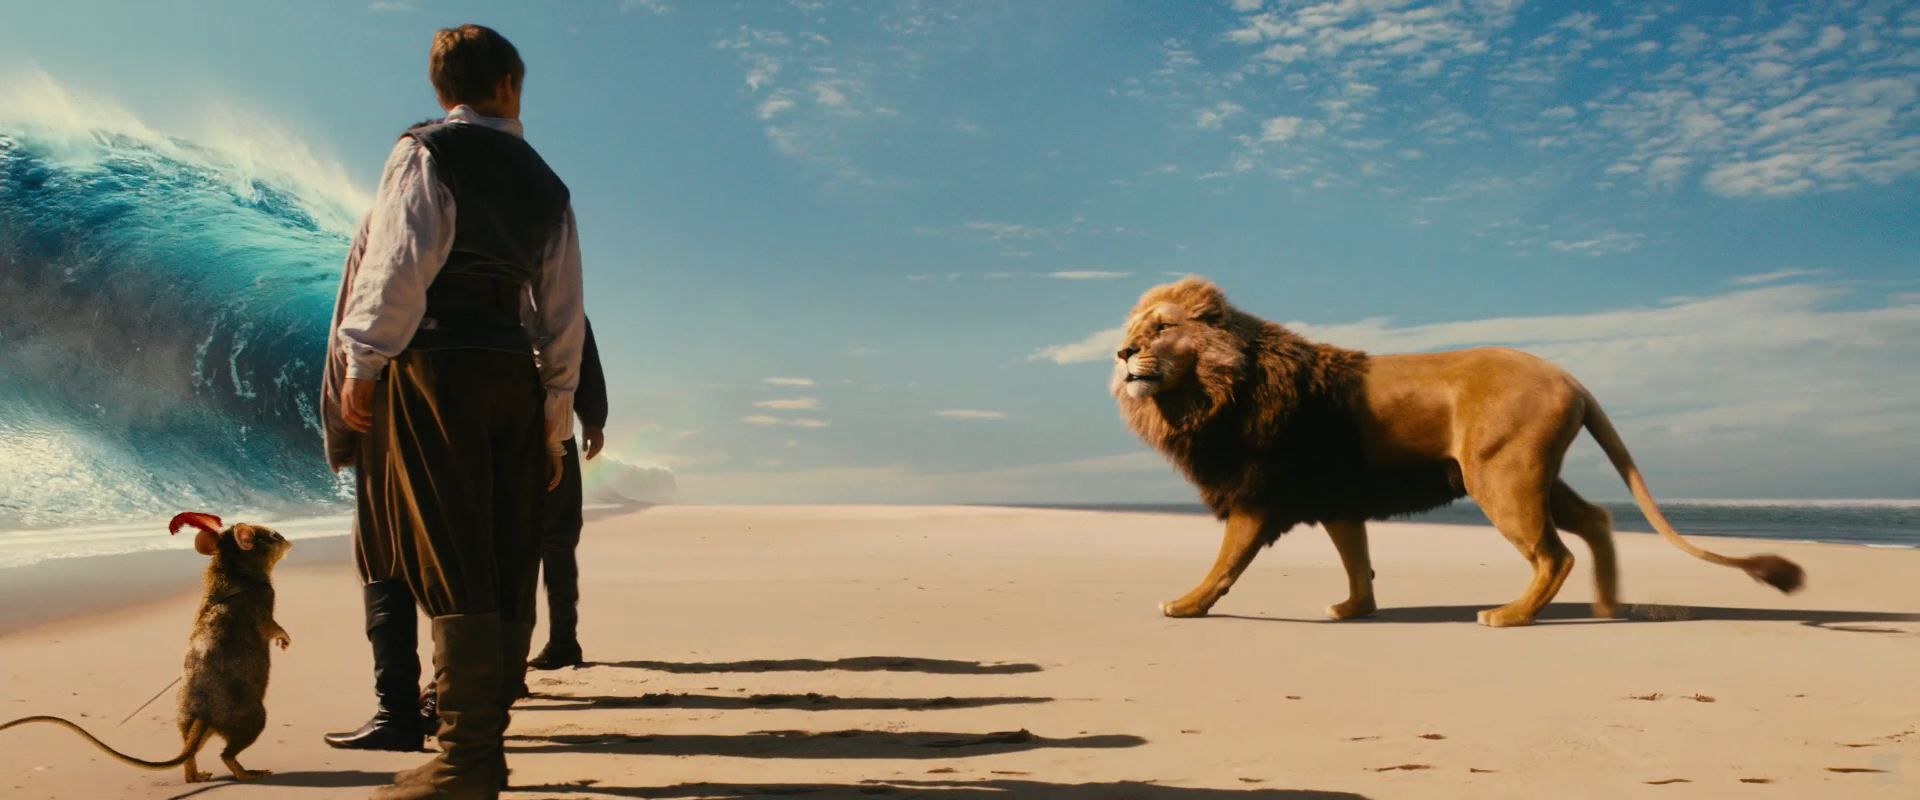 Aslan in Narnia Dawn Treader Movie Wallpaper Pics